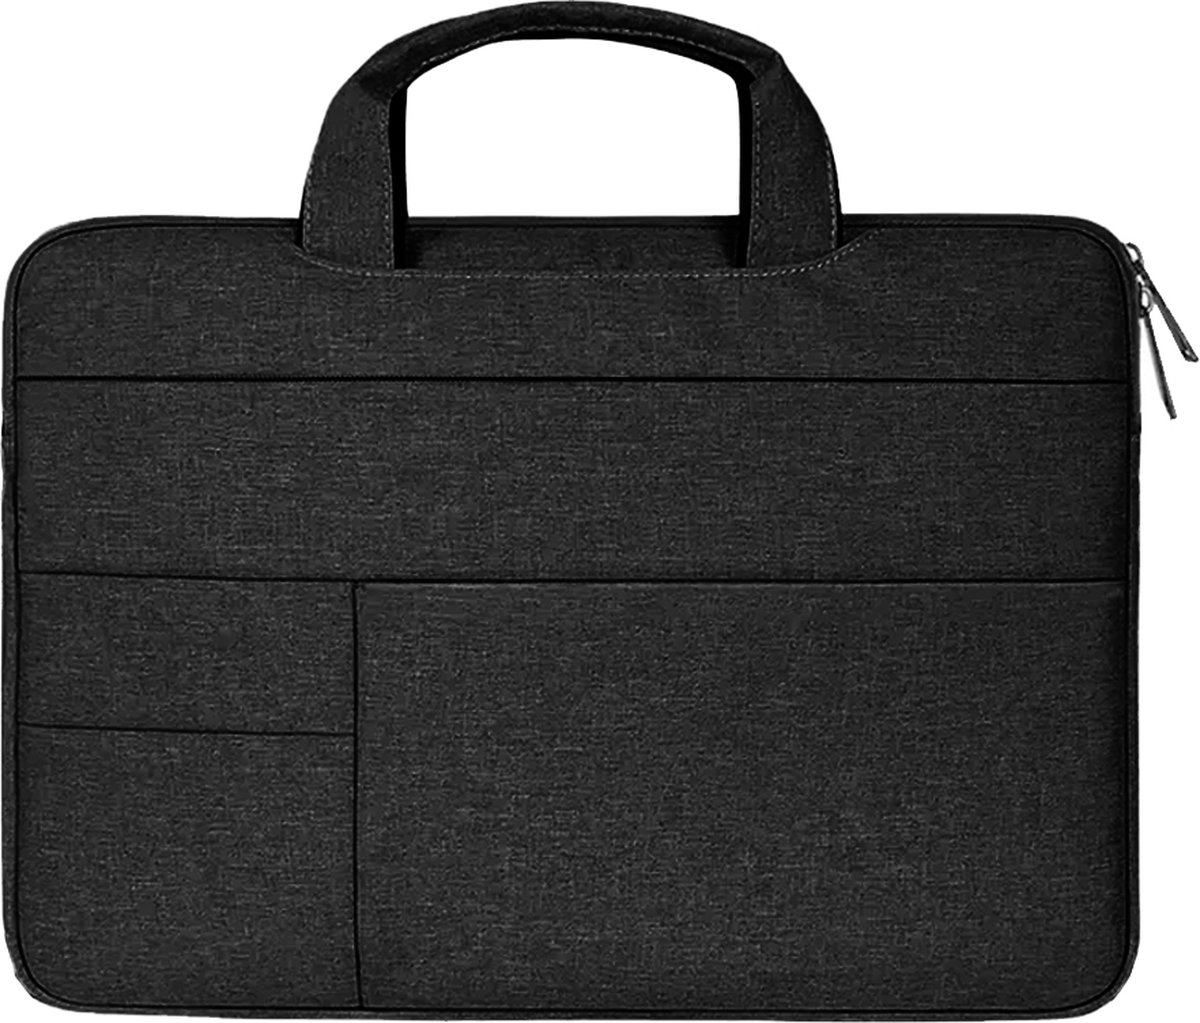 Case2go - Laptophoes geschikt voor Medion Akoya - Laptoptas 14 inch - Spatwaterdicht - Met Handvat - Zwart